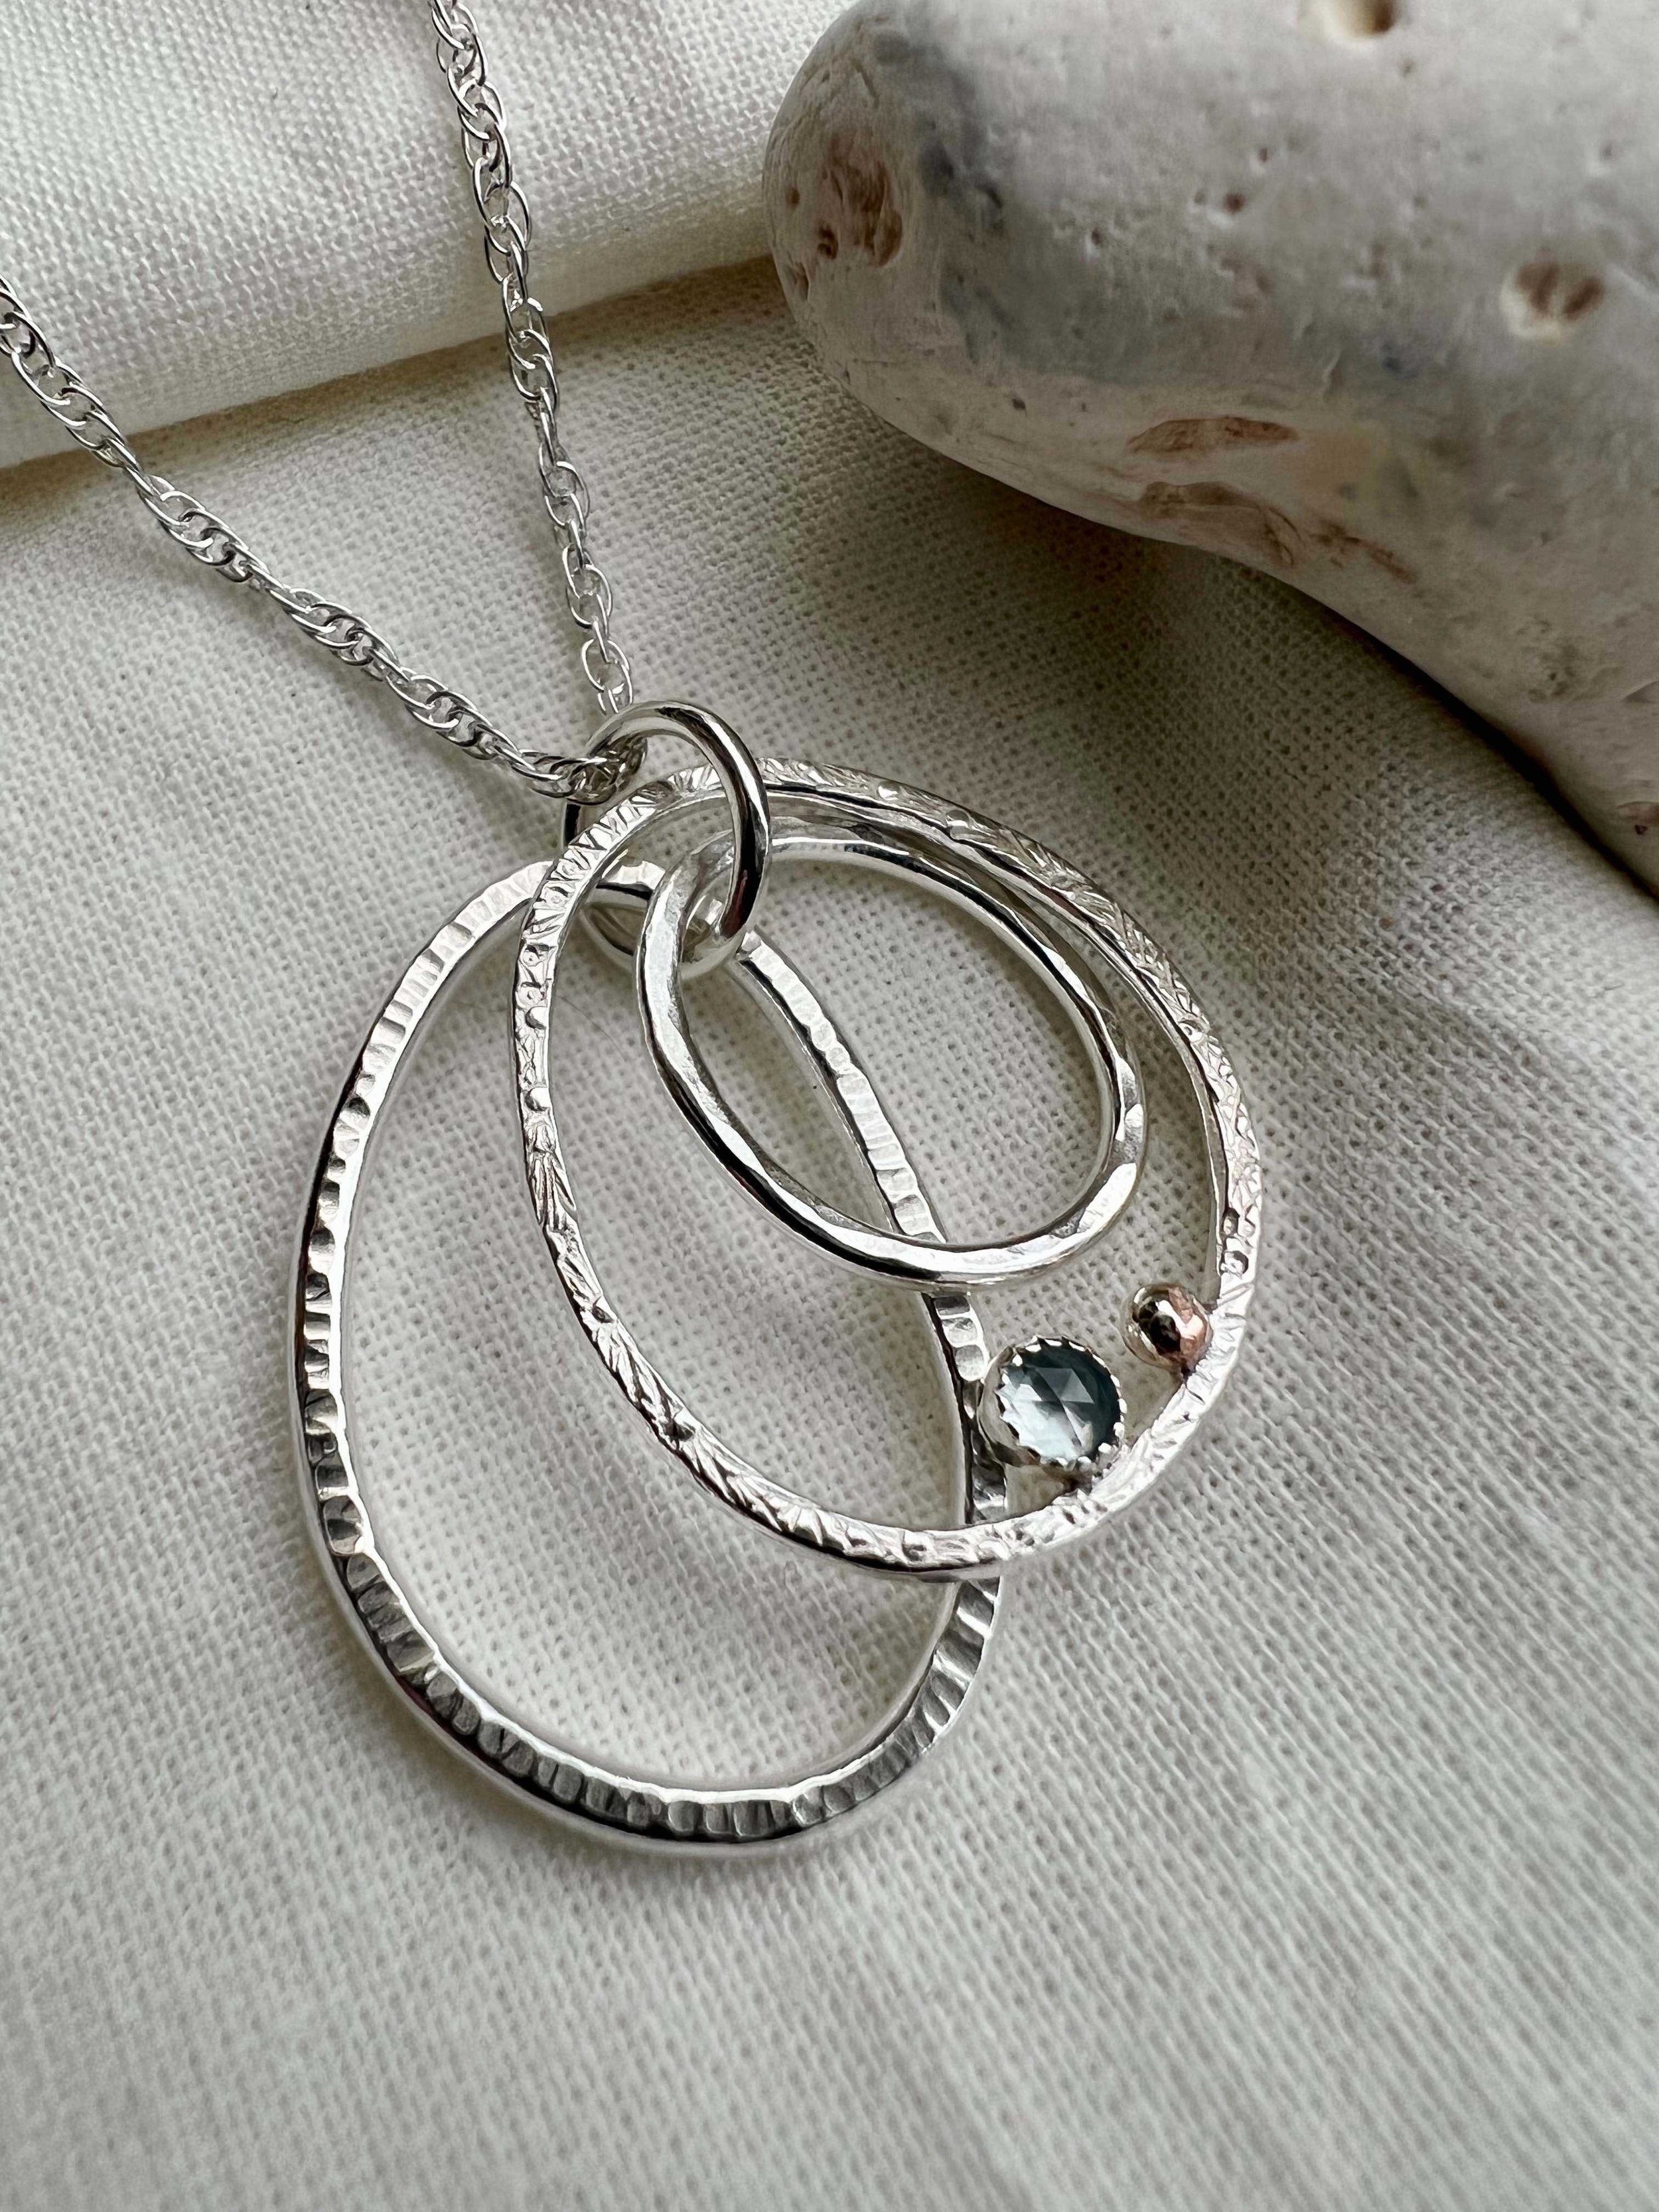 Sarah Kinnersley Blue ripple necklace lowres.jpg